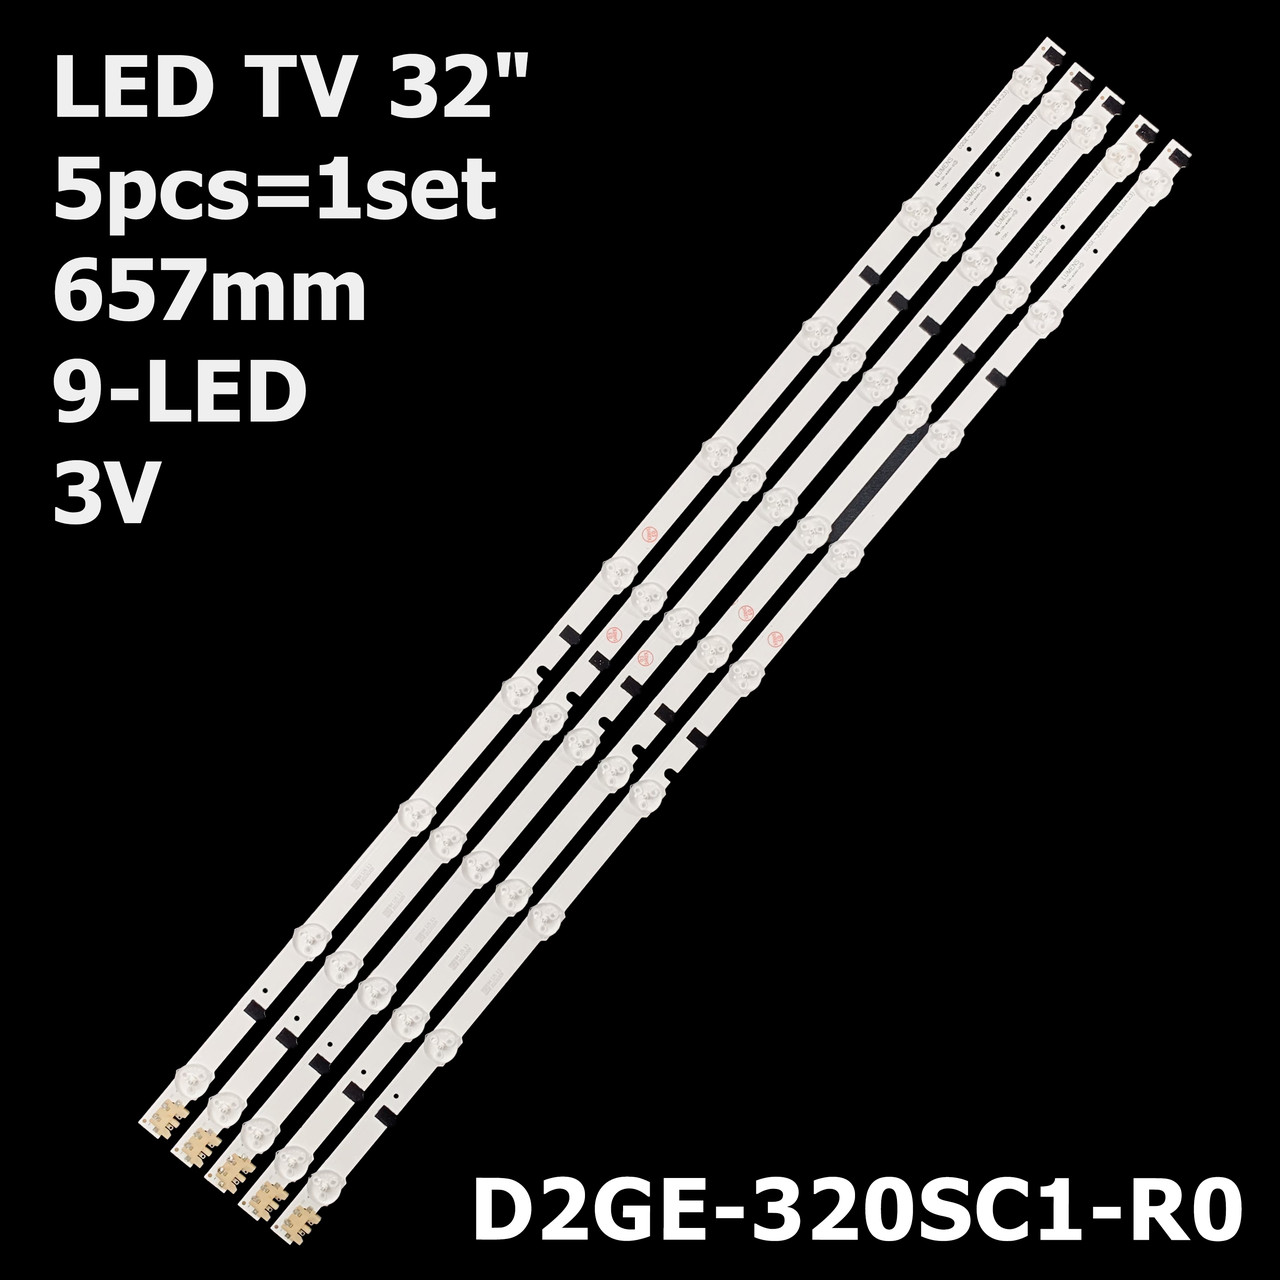 LED підсвітка TV 32" 9LED 3V 657mm SHARP D2GE-320SC1-R0 2013SVS32 BN96-28489A (Original) 5шт., фото 1